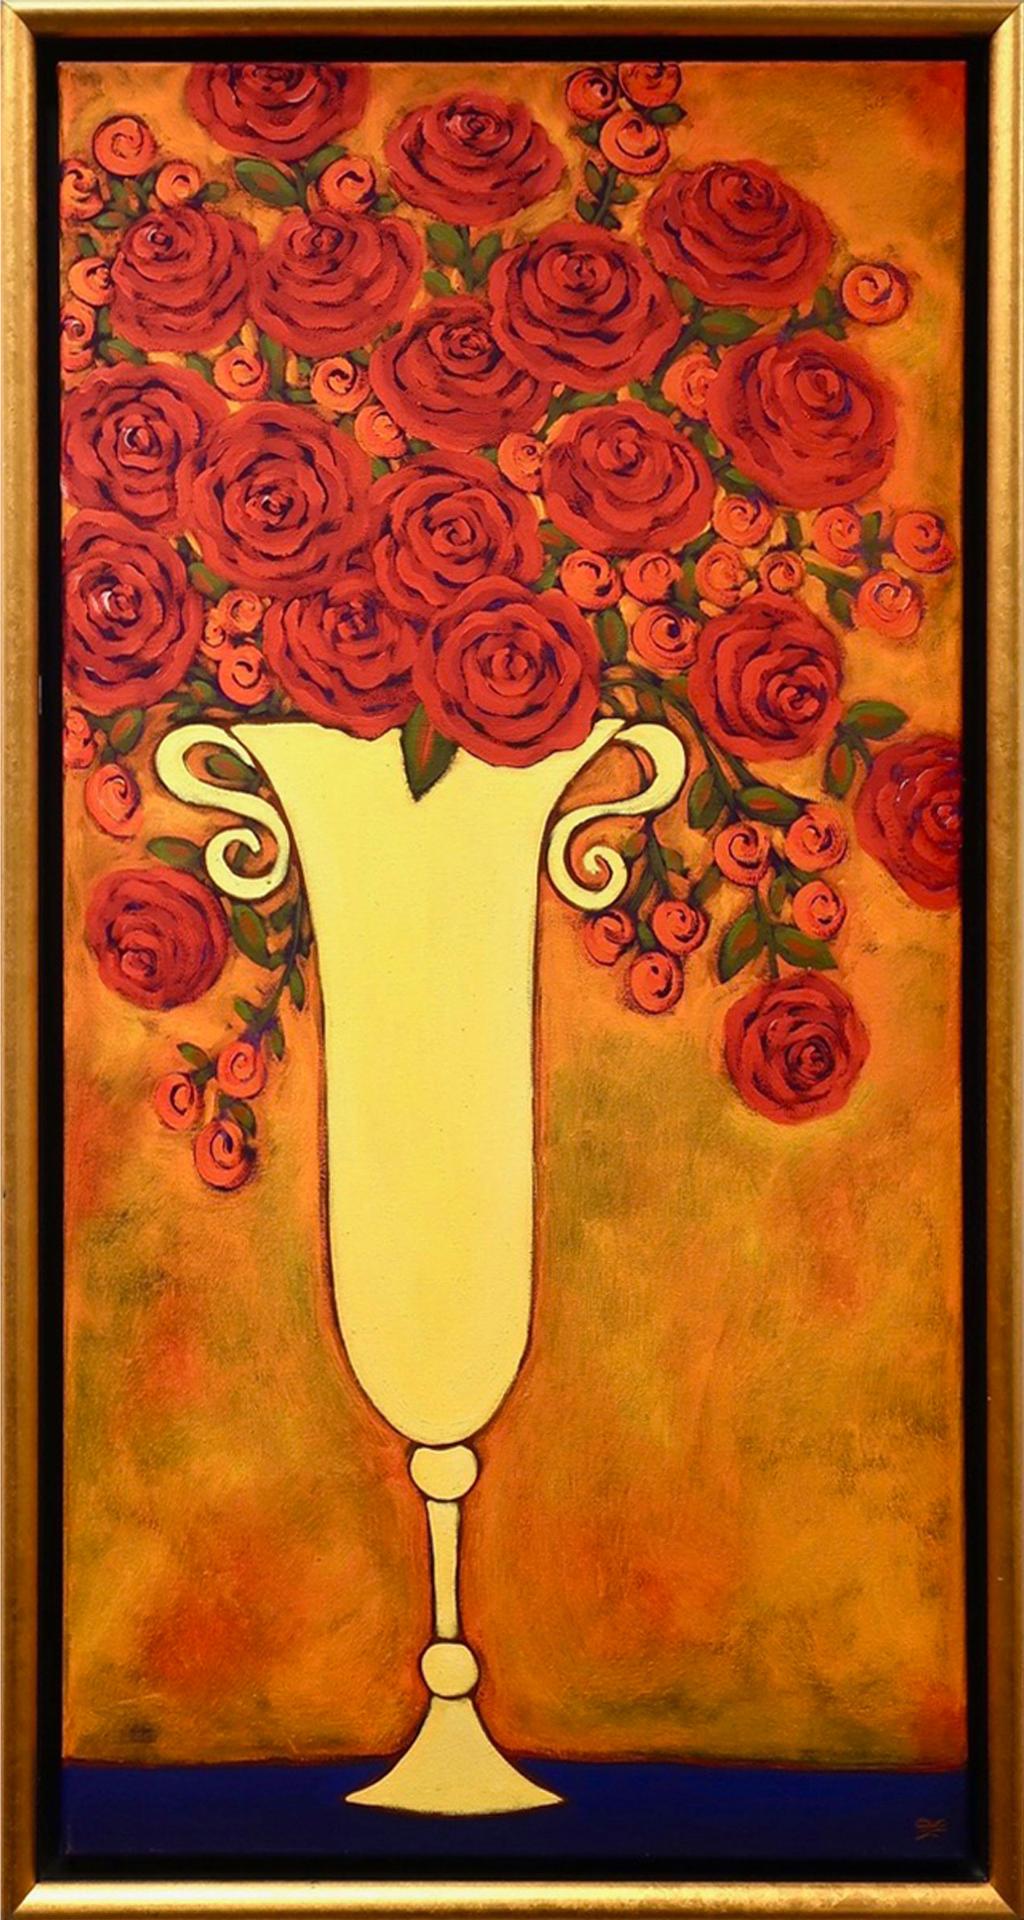 Karen Rieger (1960) - Red Roses With Ivory Vase